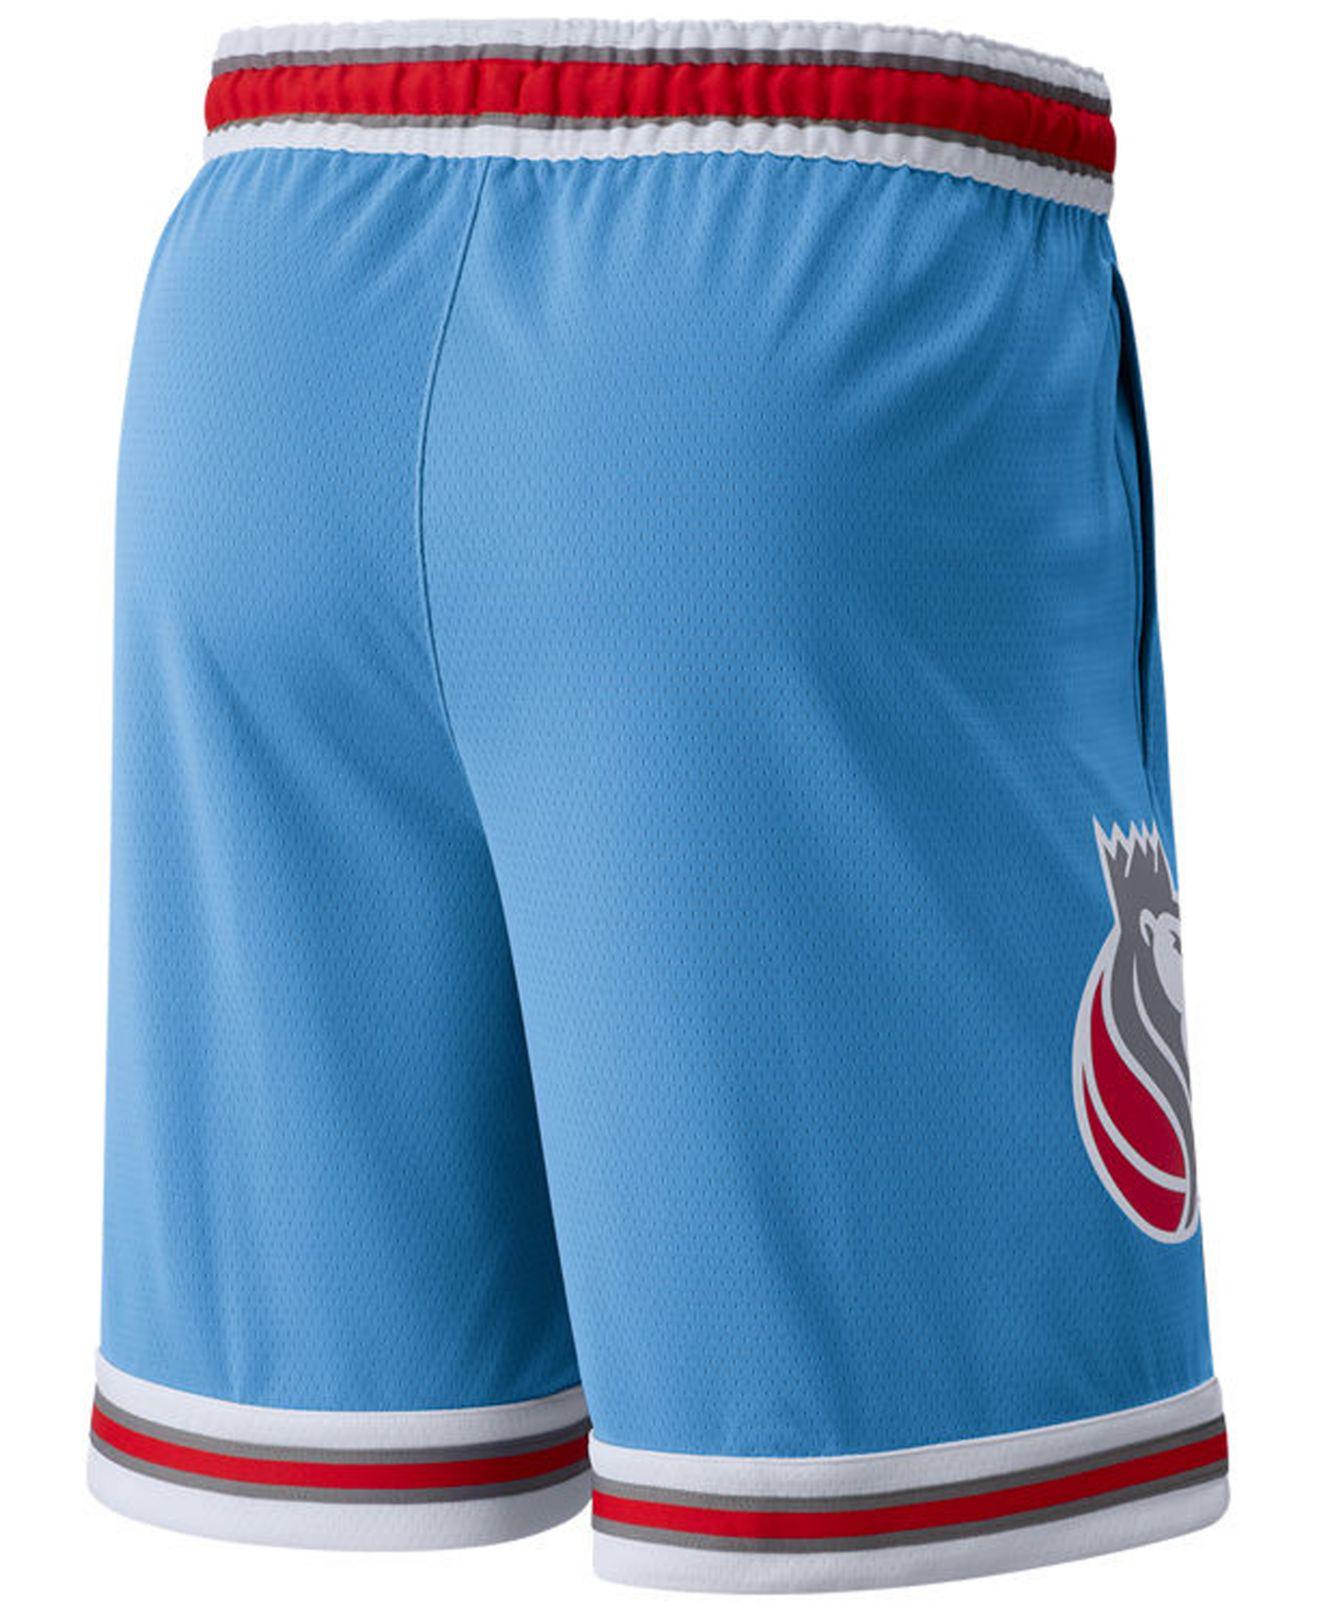 Chicago Bulls City Edition 2020 Men's Nike NBA Swingman Shorts.